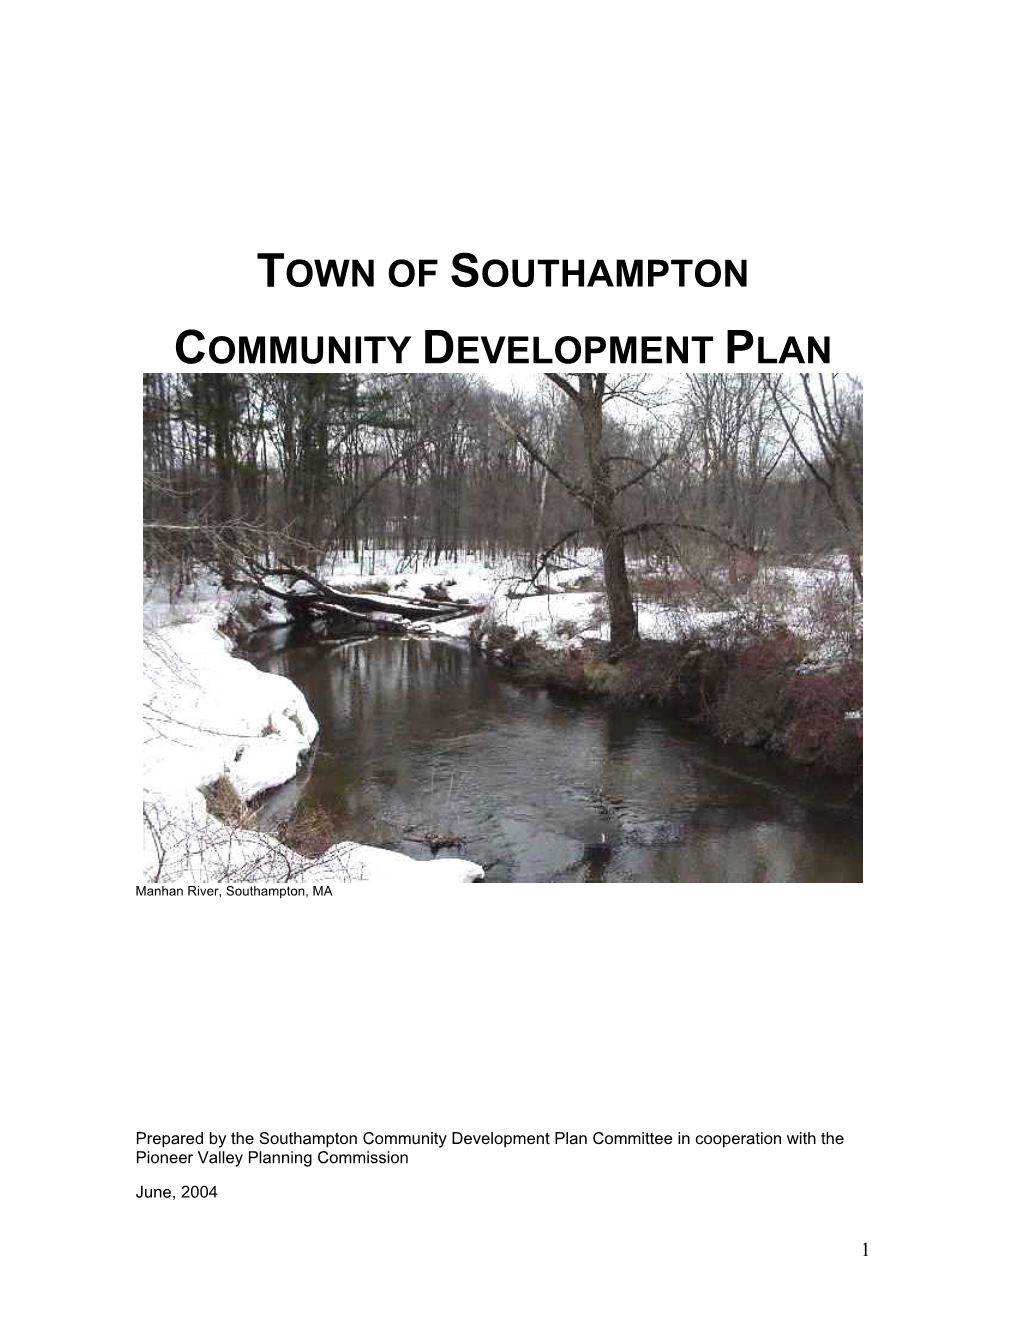 2004 Community Development Plan